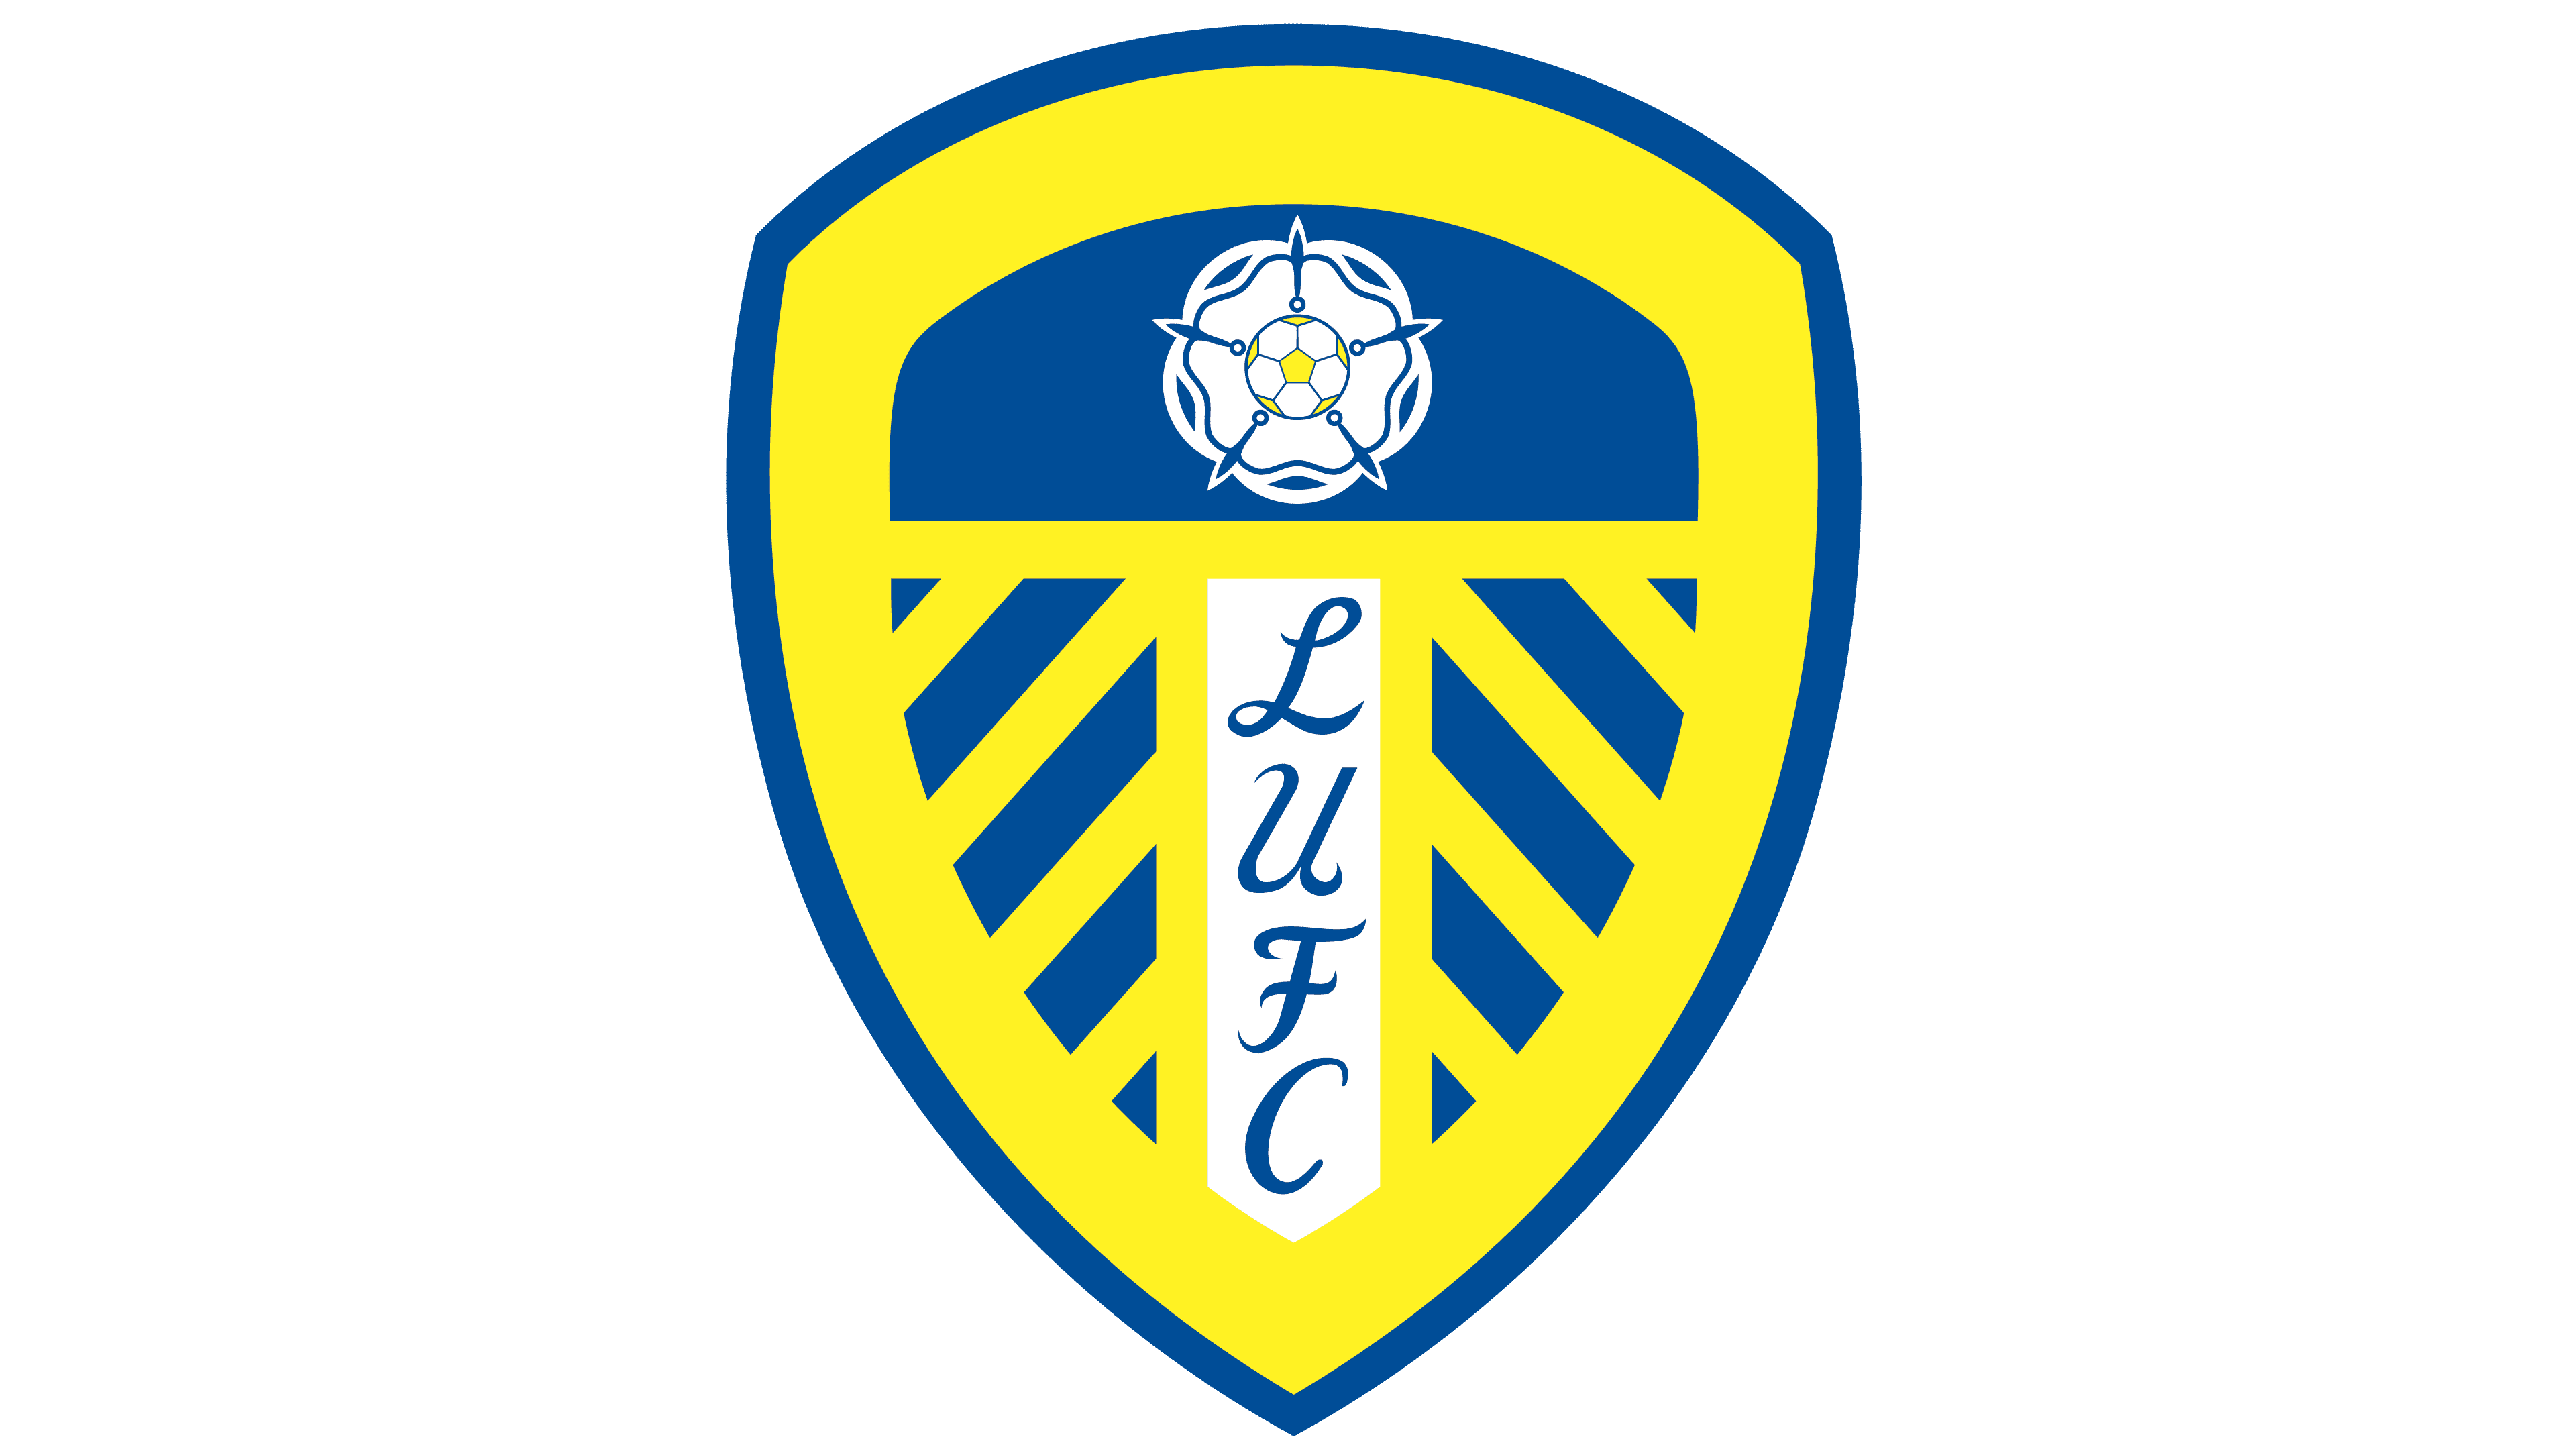 https://1000logos.net/wp-content/uploads/2020/09/Leeds-United-logo.png